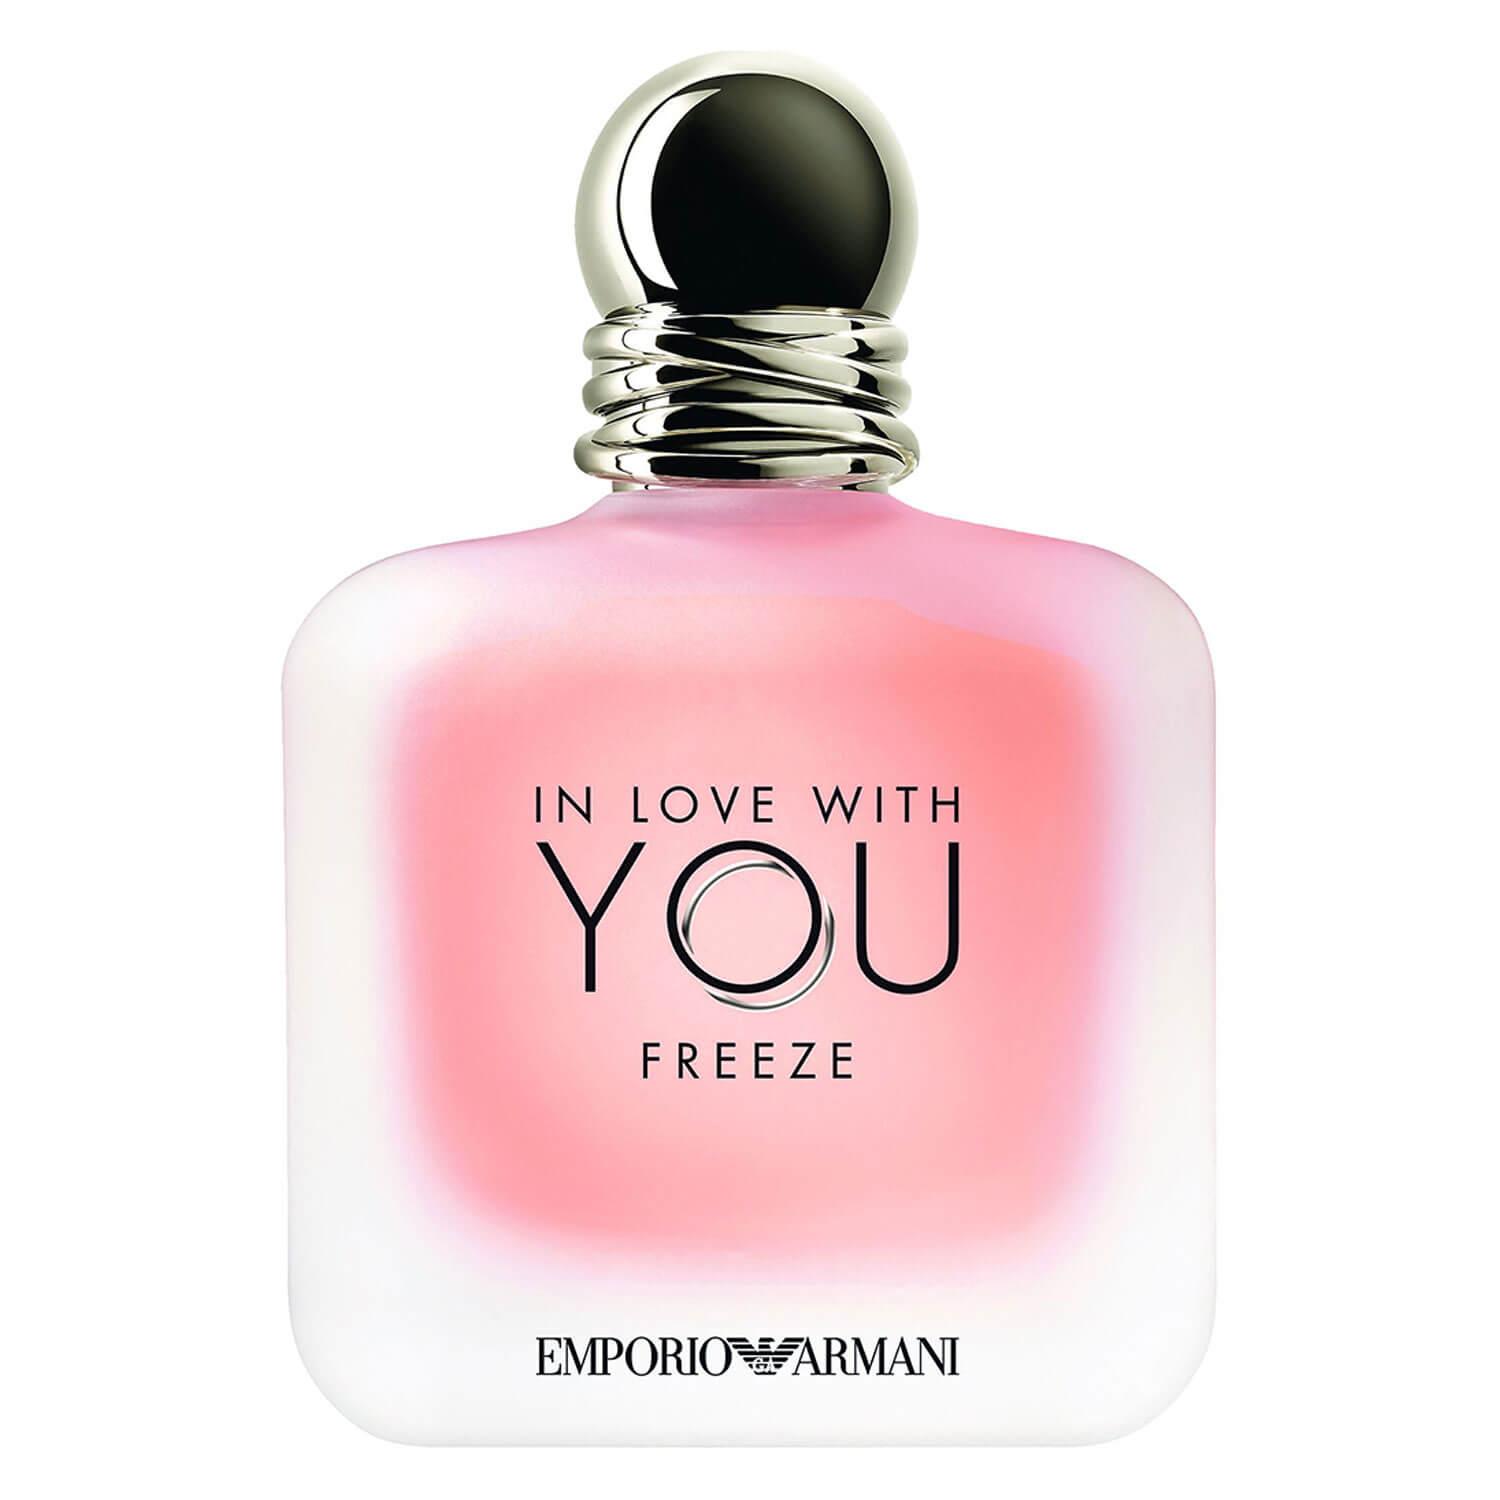 Emporio Armani - In Love With You Freeze Eau de Parfum